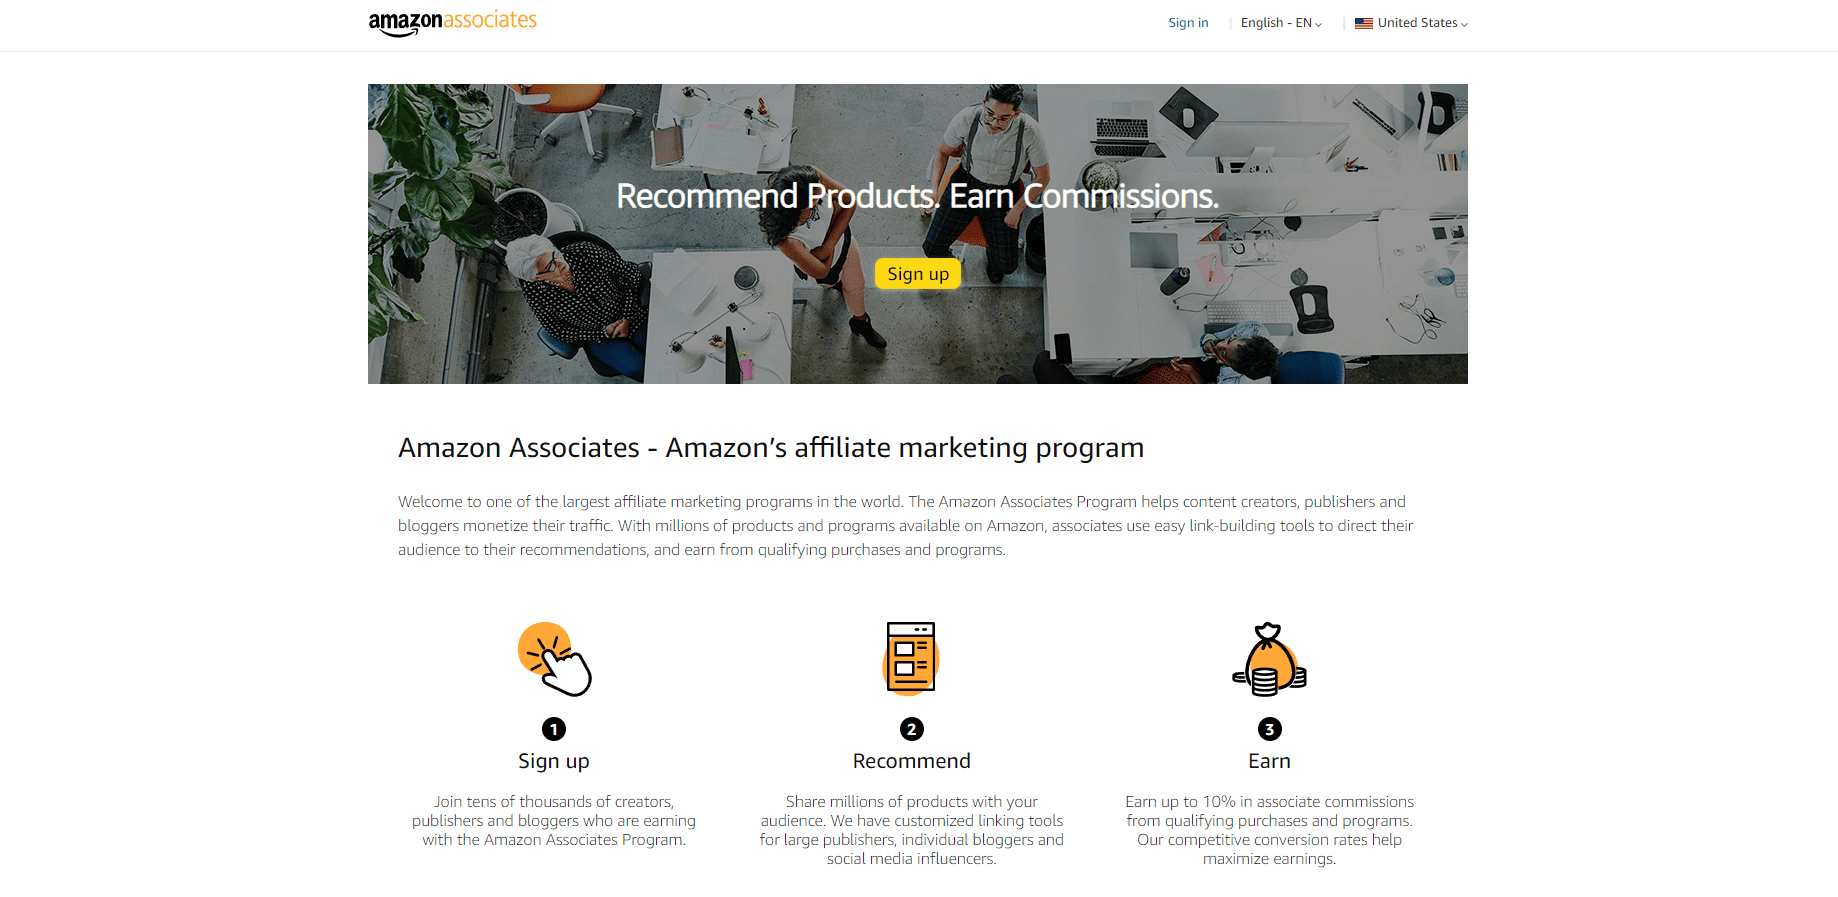 Amazon associates program is worth considering to make money with affiliate marketing. 